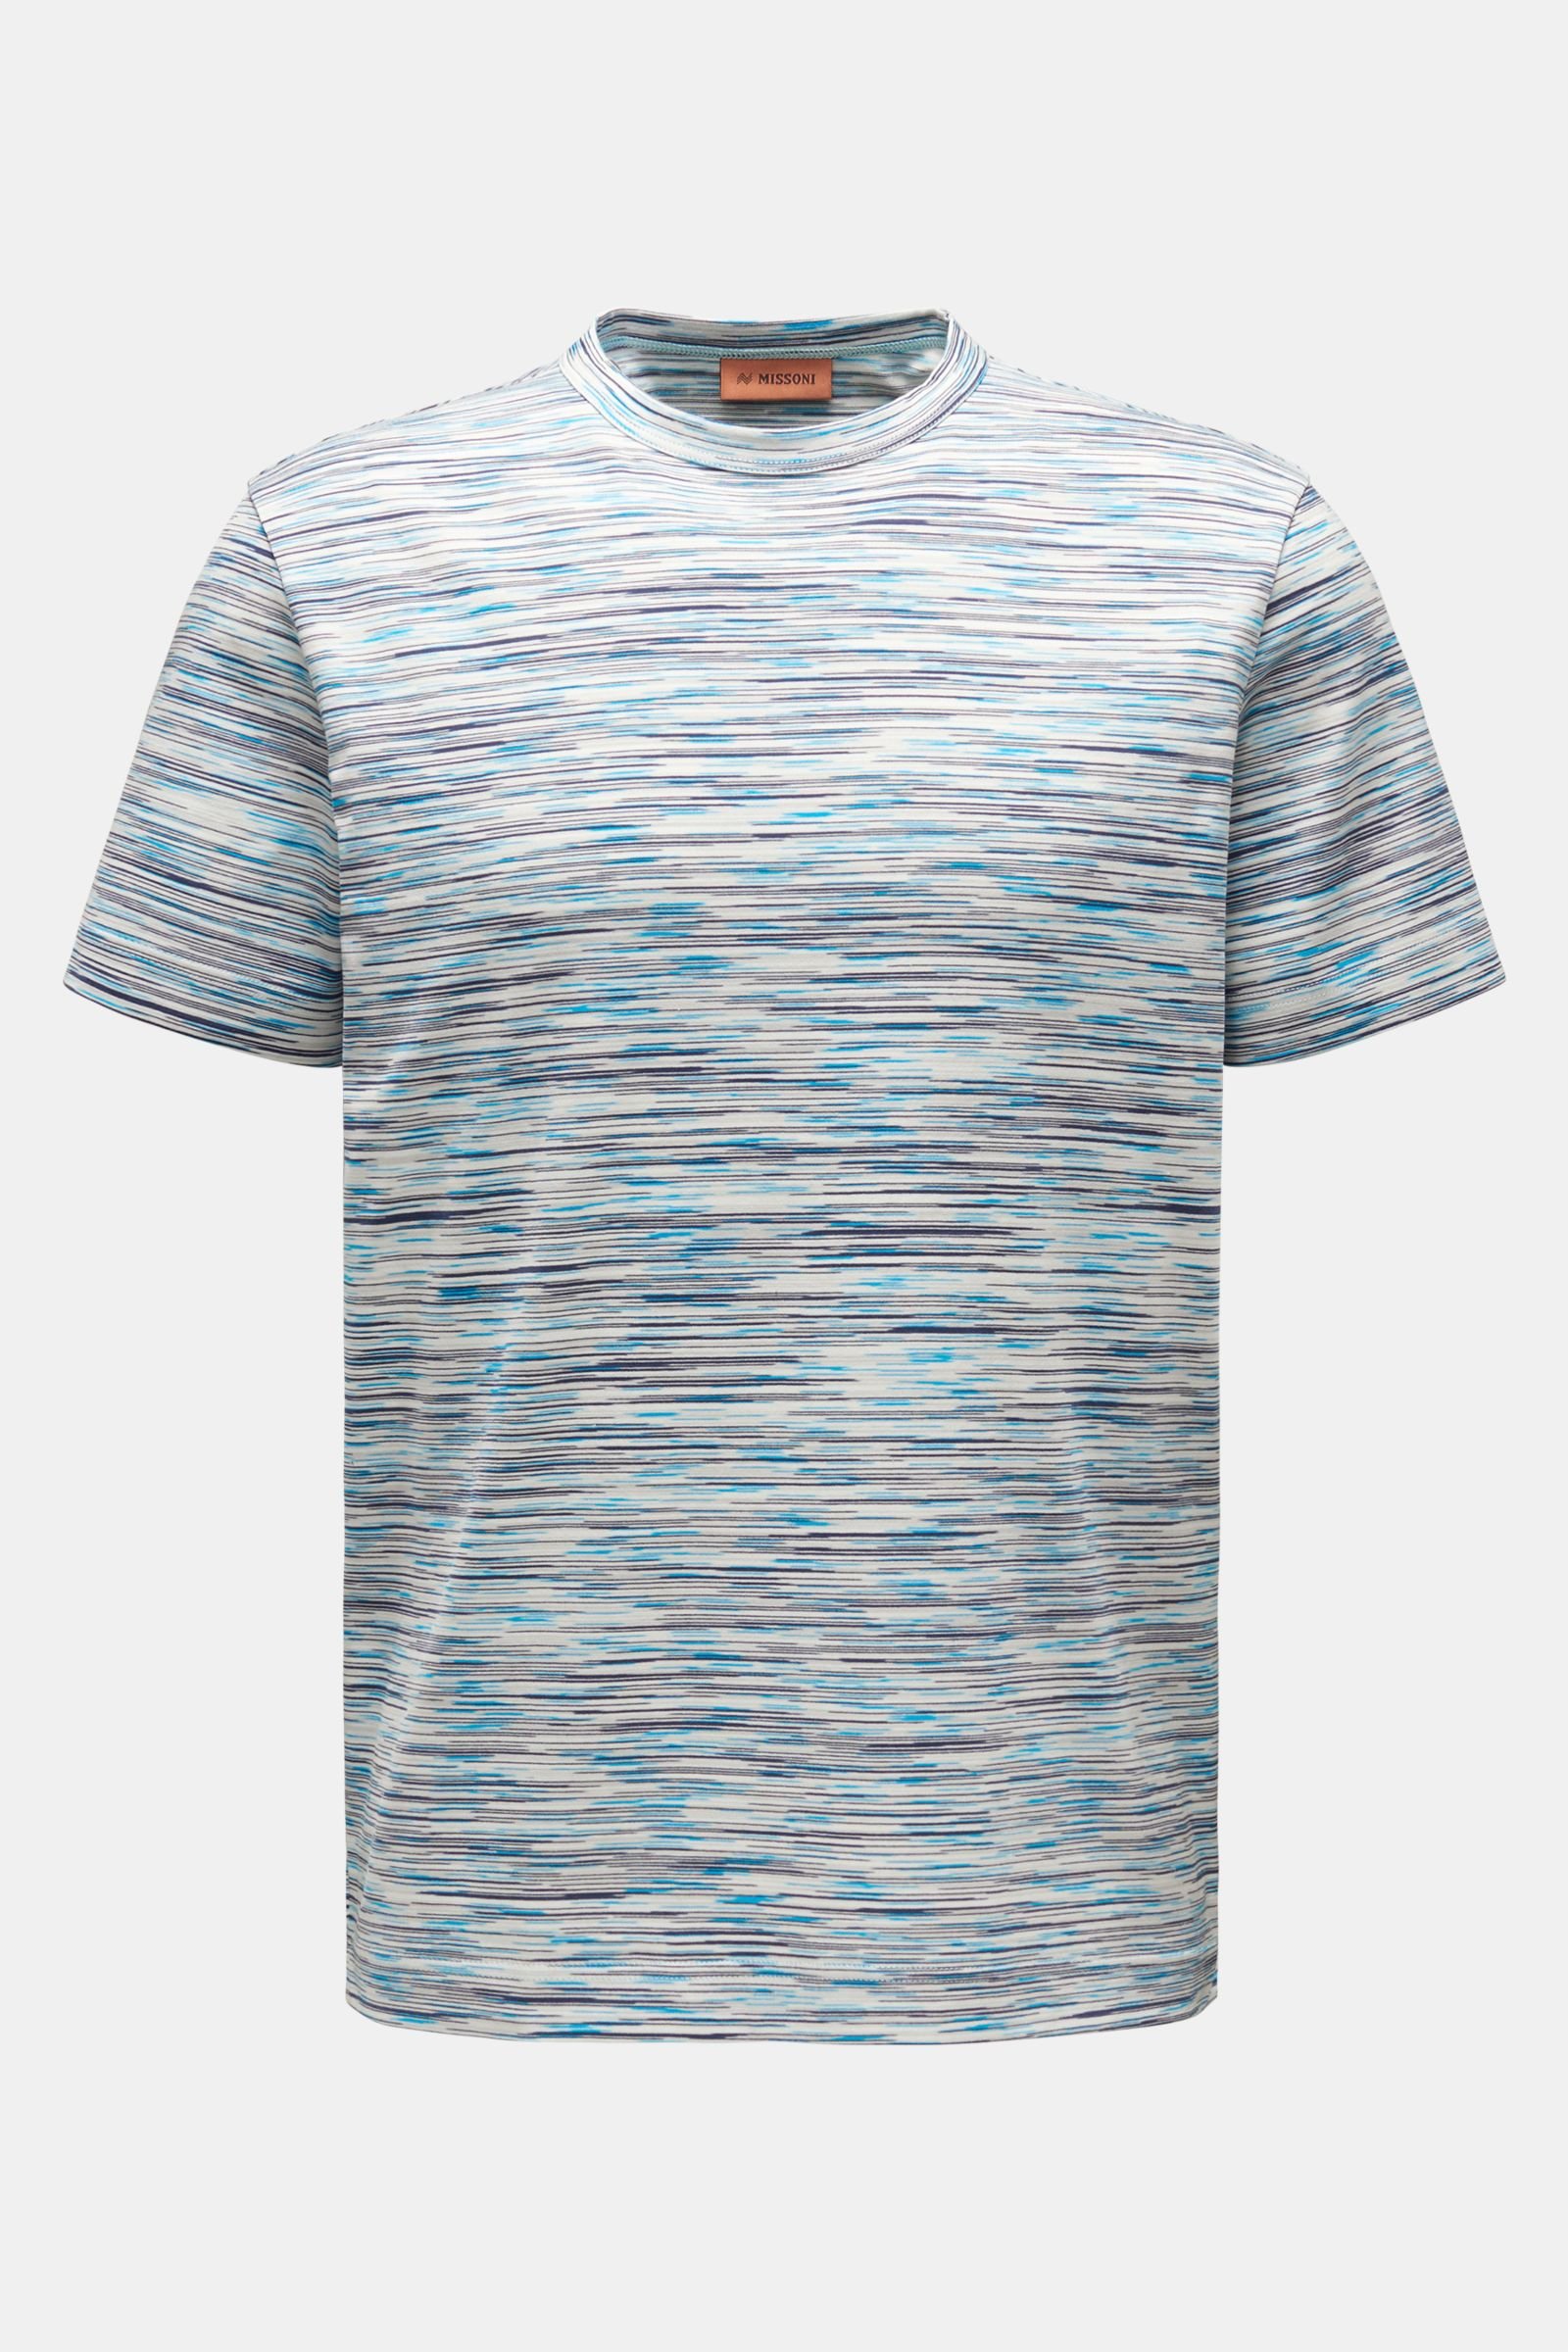 Crew neck T-shirt turquoise/navy/light grey striped